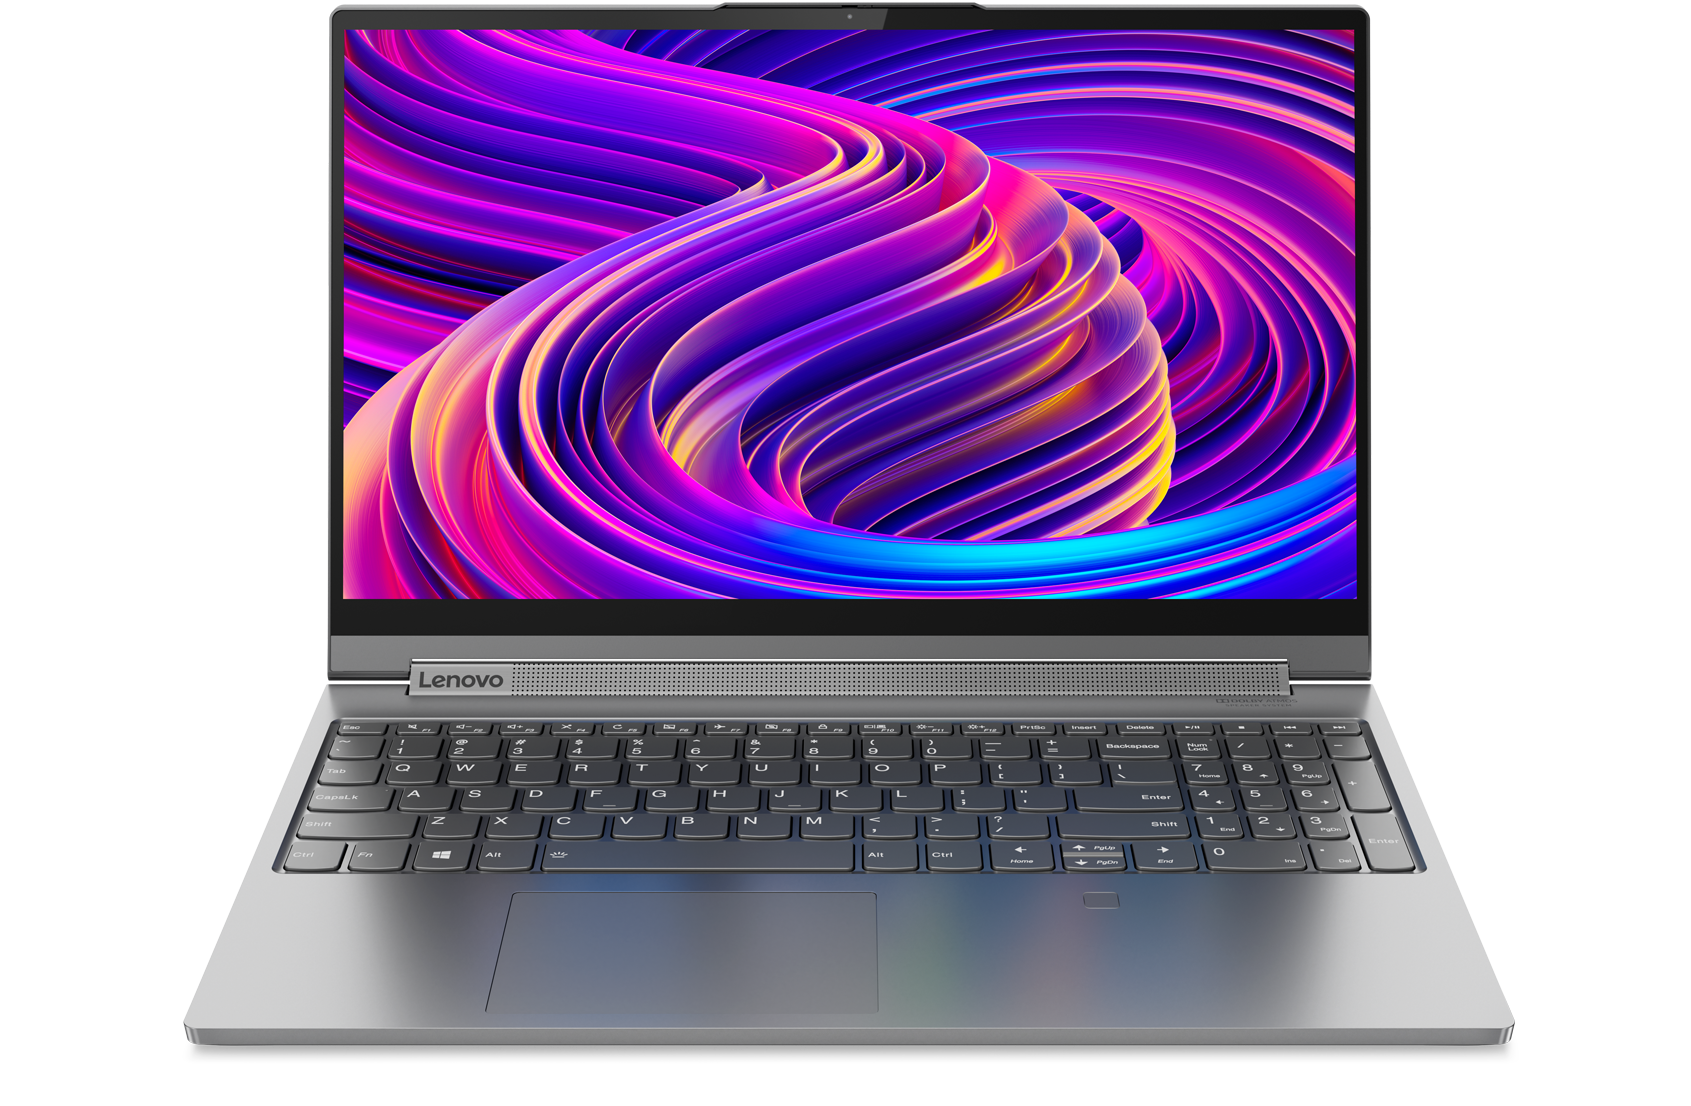 Lenovo Yoga C940 (15") 2-in-1 laptop, front view